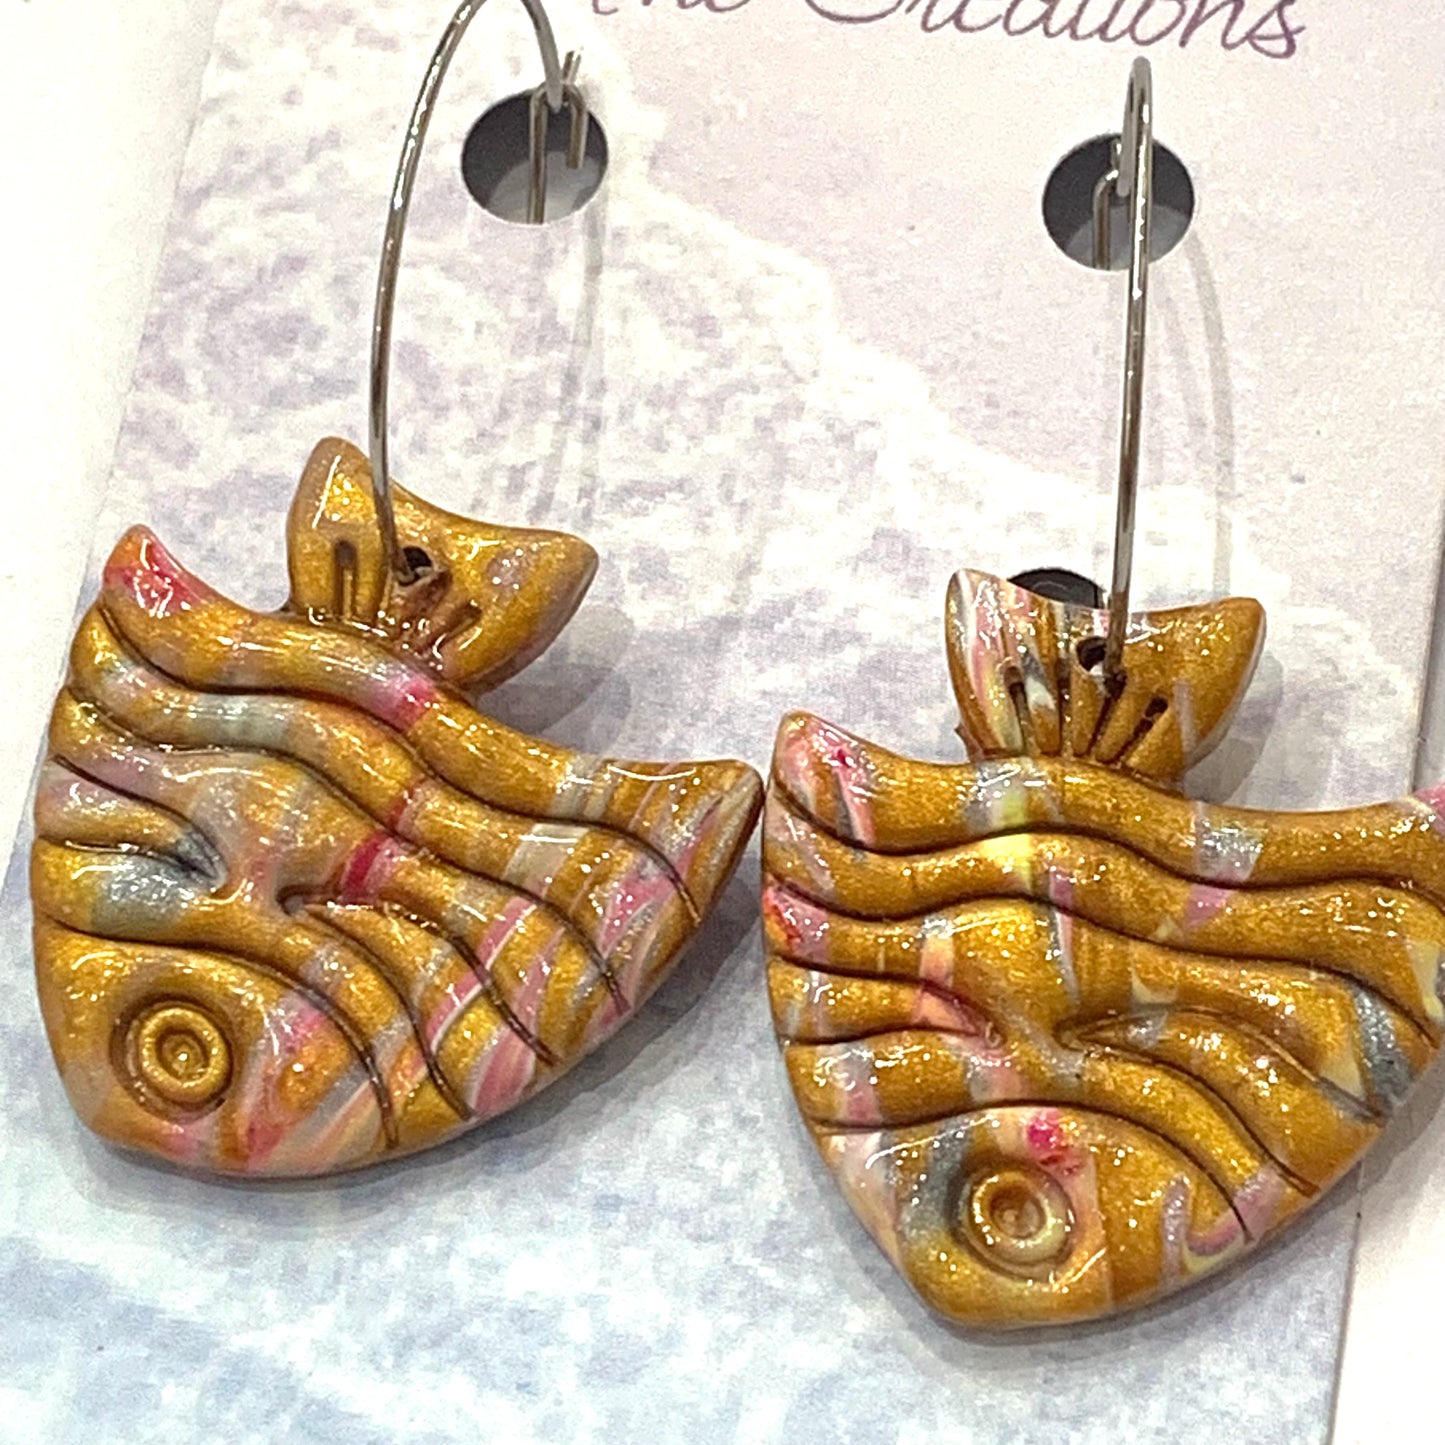 Sailvie Creations - Golden Fish Hoop Dangle Earrings